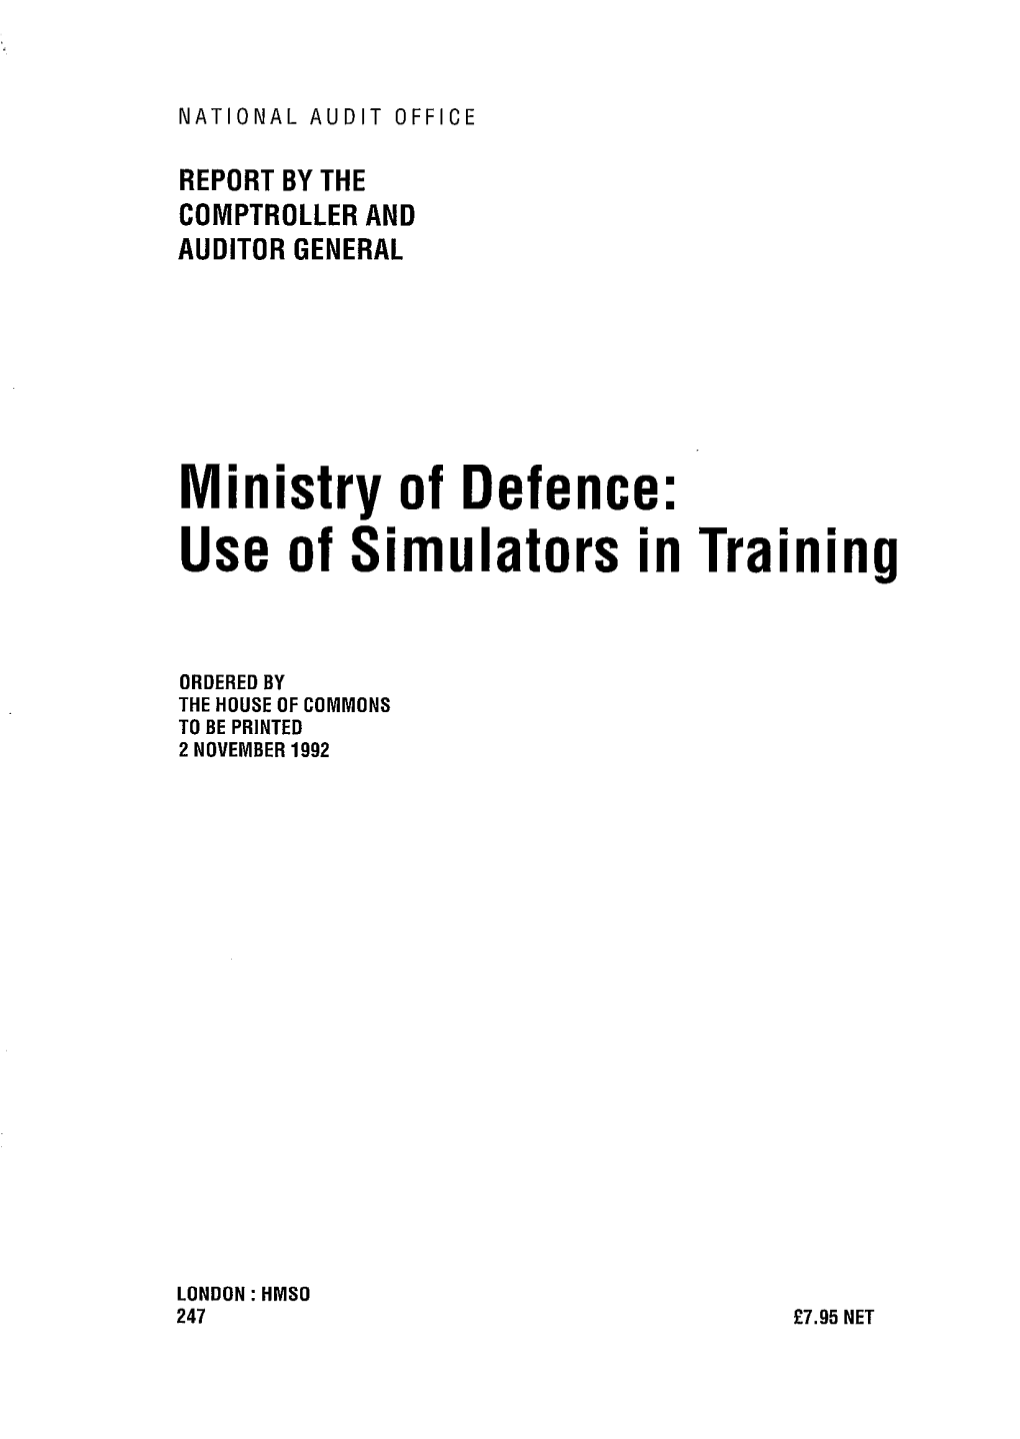 Use of Simulators in Training